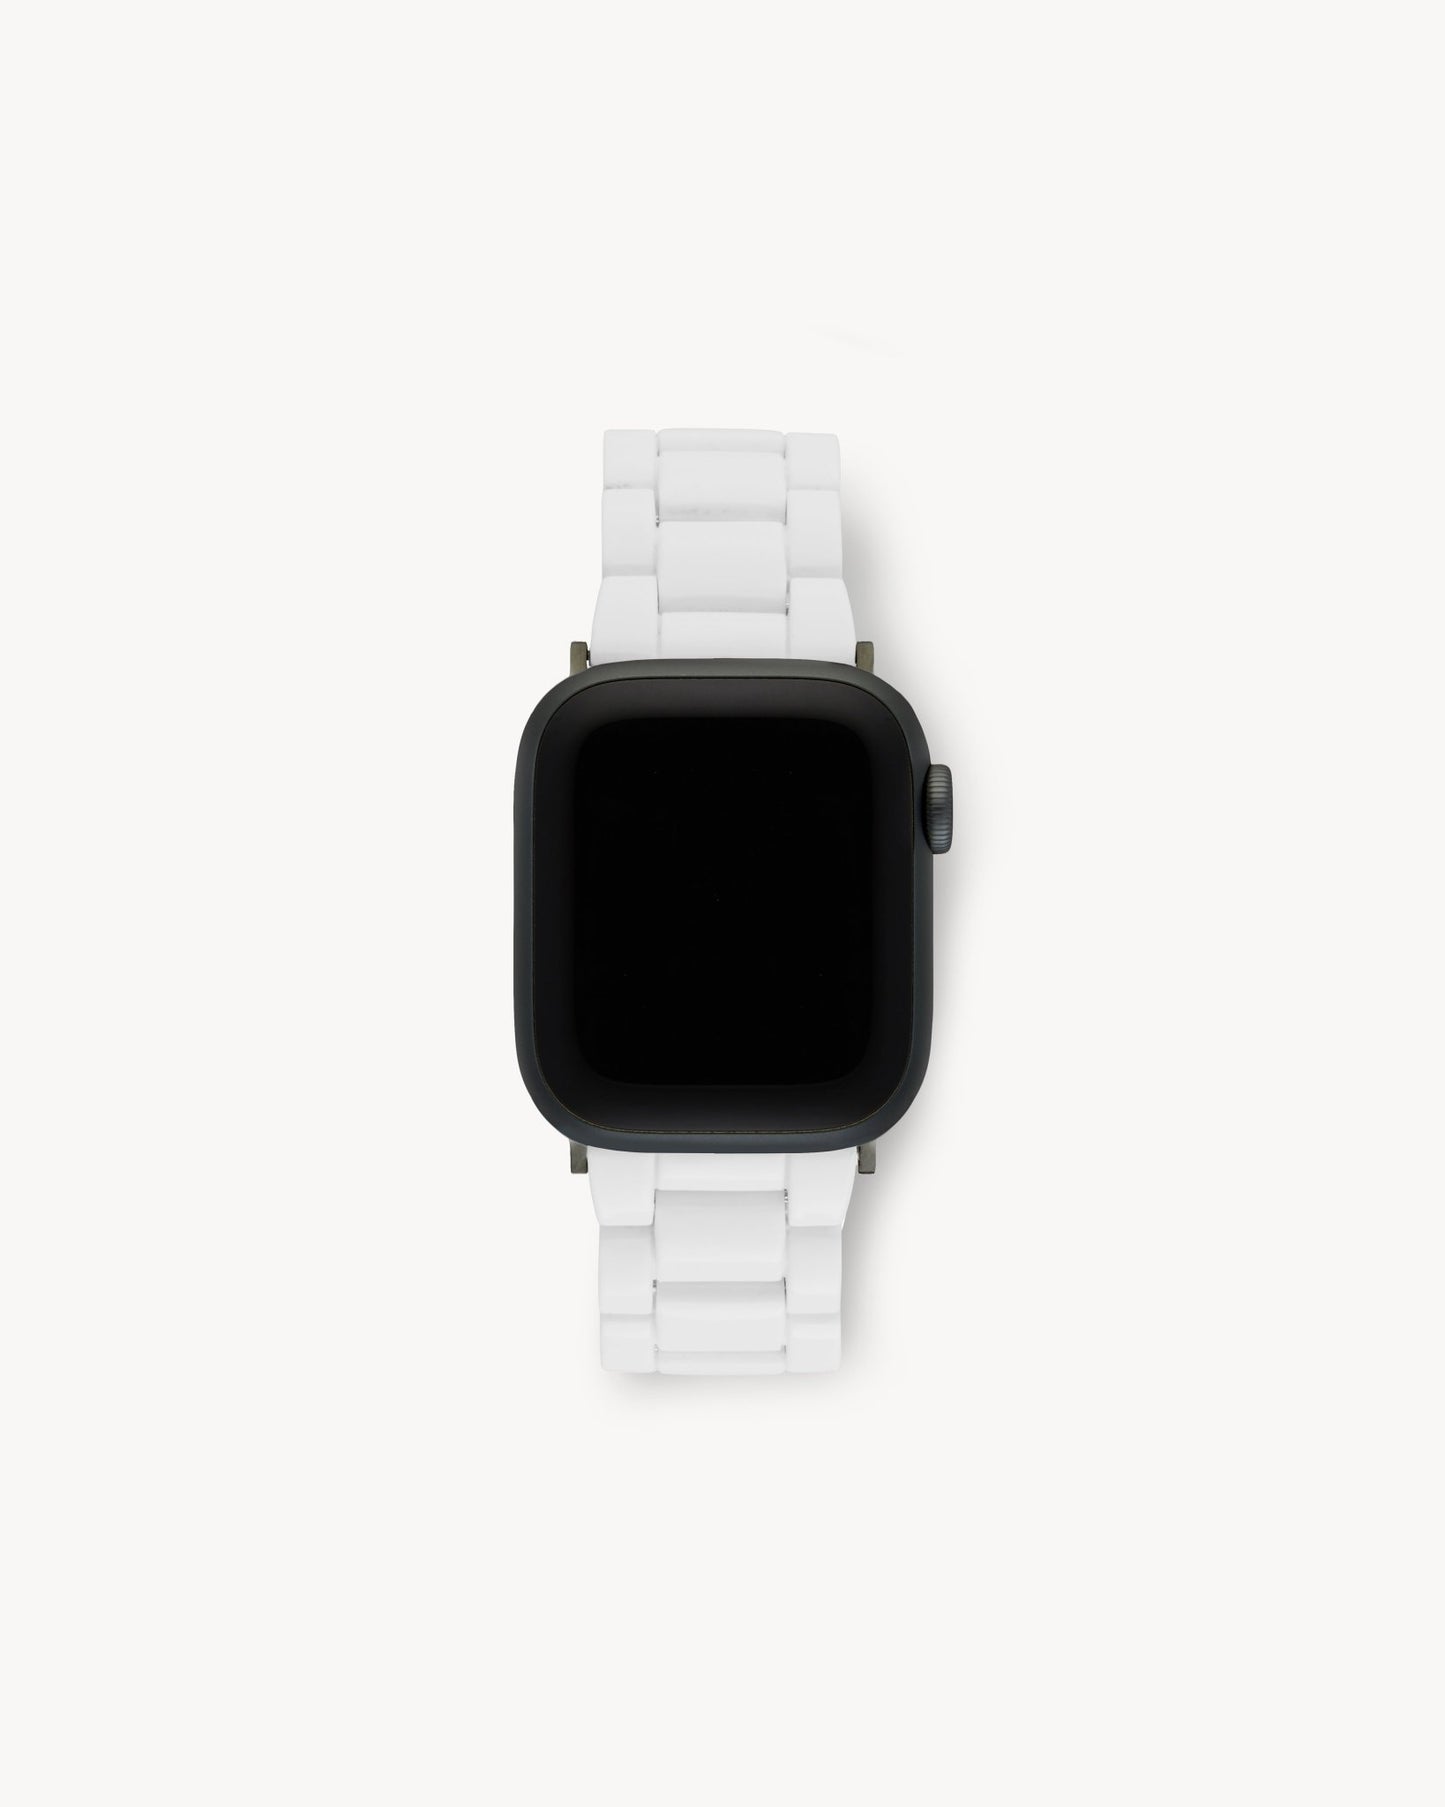 MACHETE Deluxe Apple Watch Band Set in White